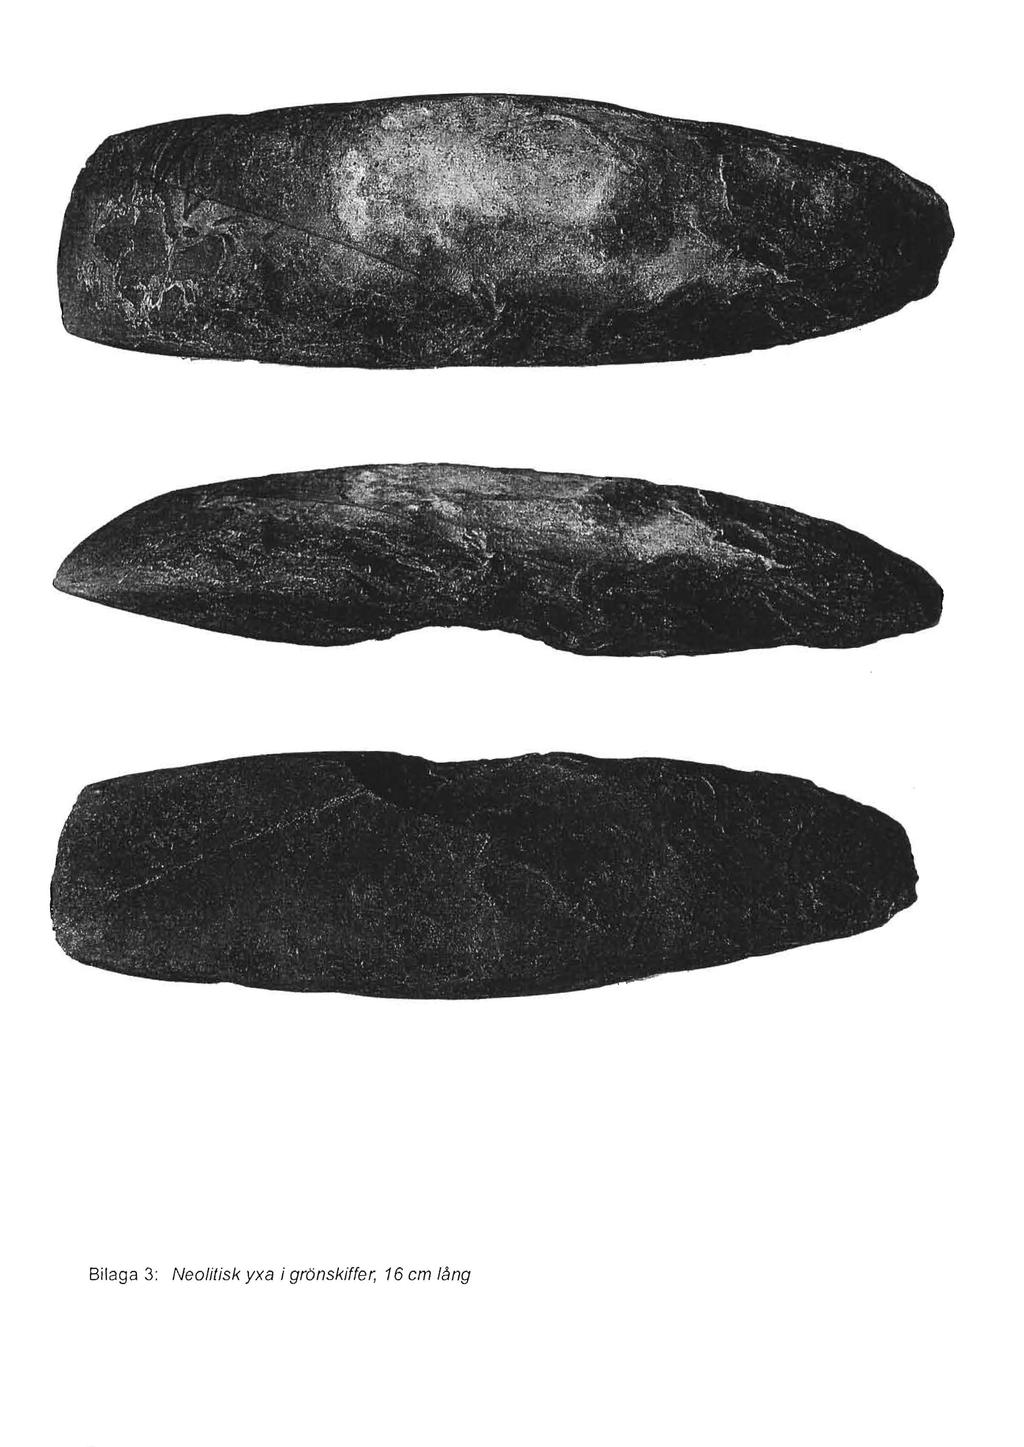 Bilaga 3: Neolitisk yxa